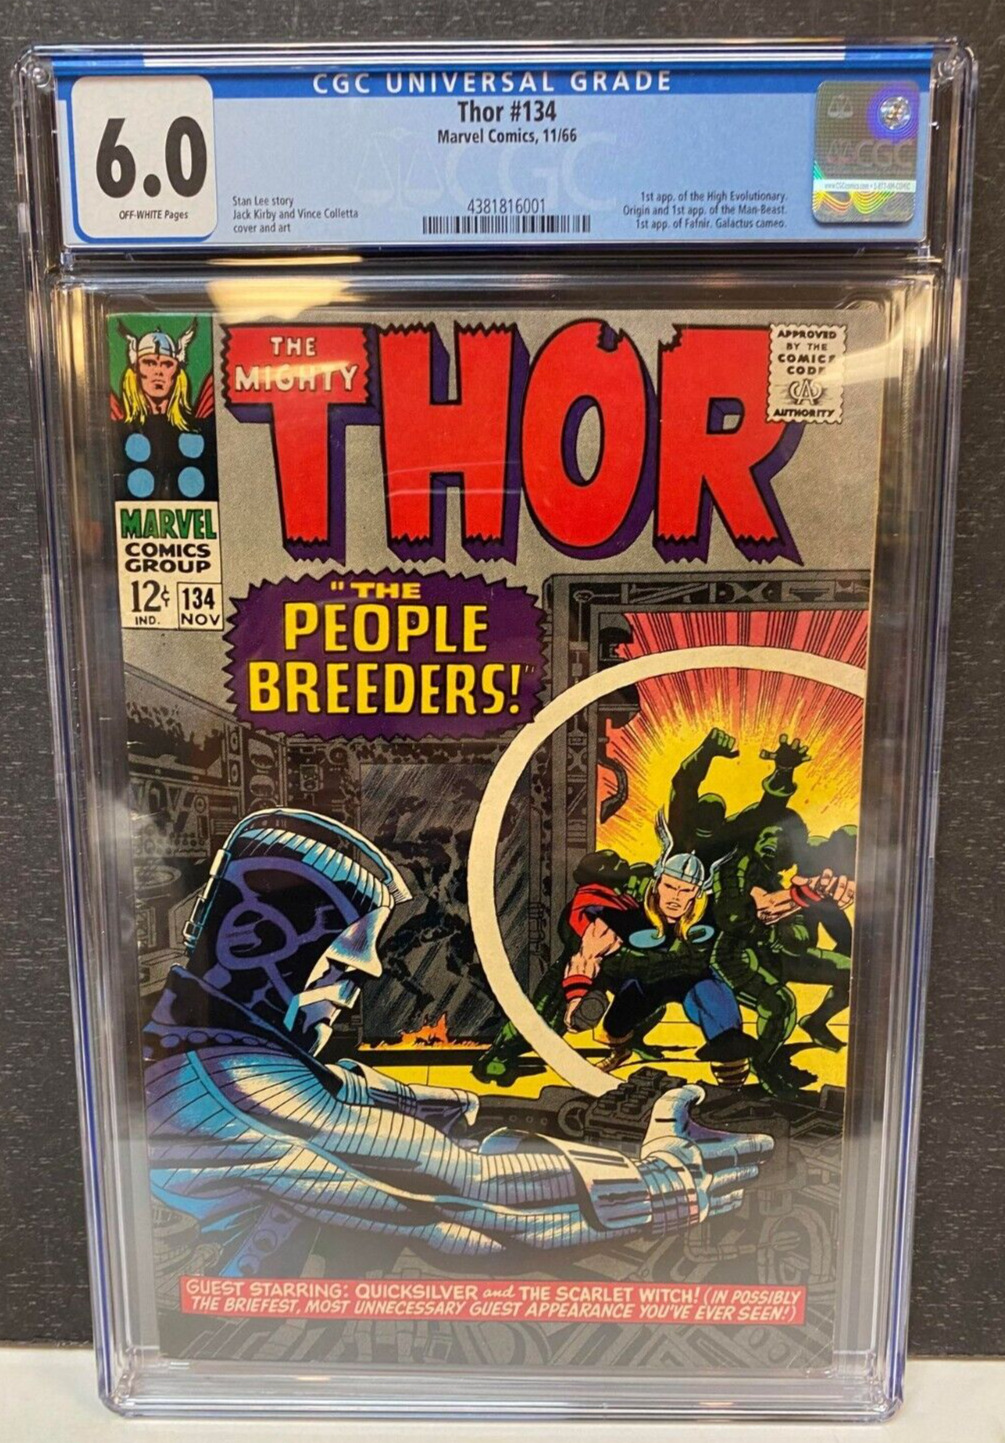 Thor #134 CGC 6.0 - 1st appearance High Evolutionary - GotG Vol 3 movie - 1966